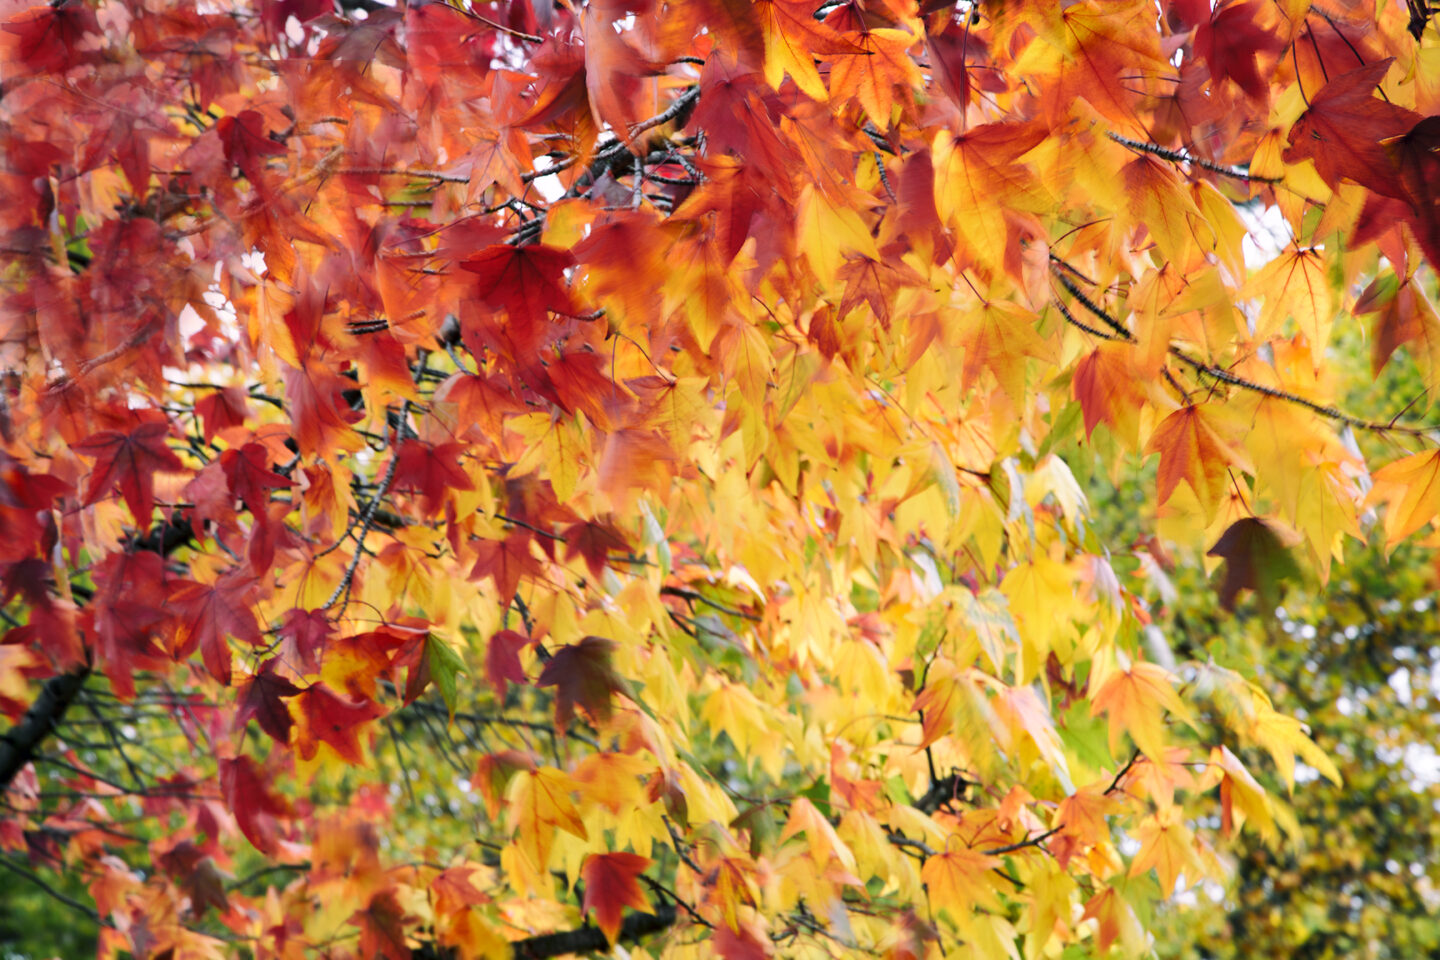 Flaming autumn leaves, image by Carol Schiraldi of Carol's Little World